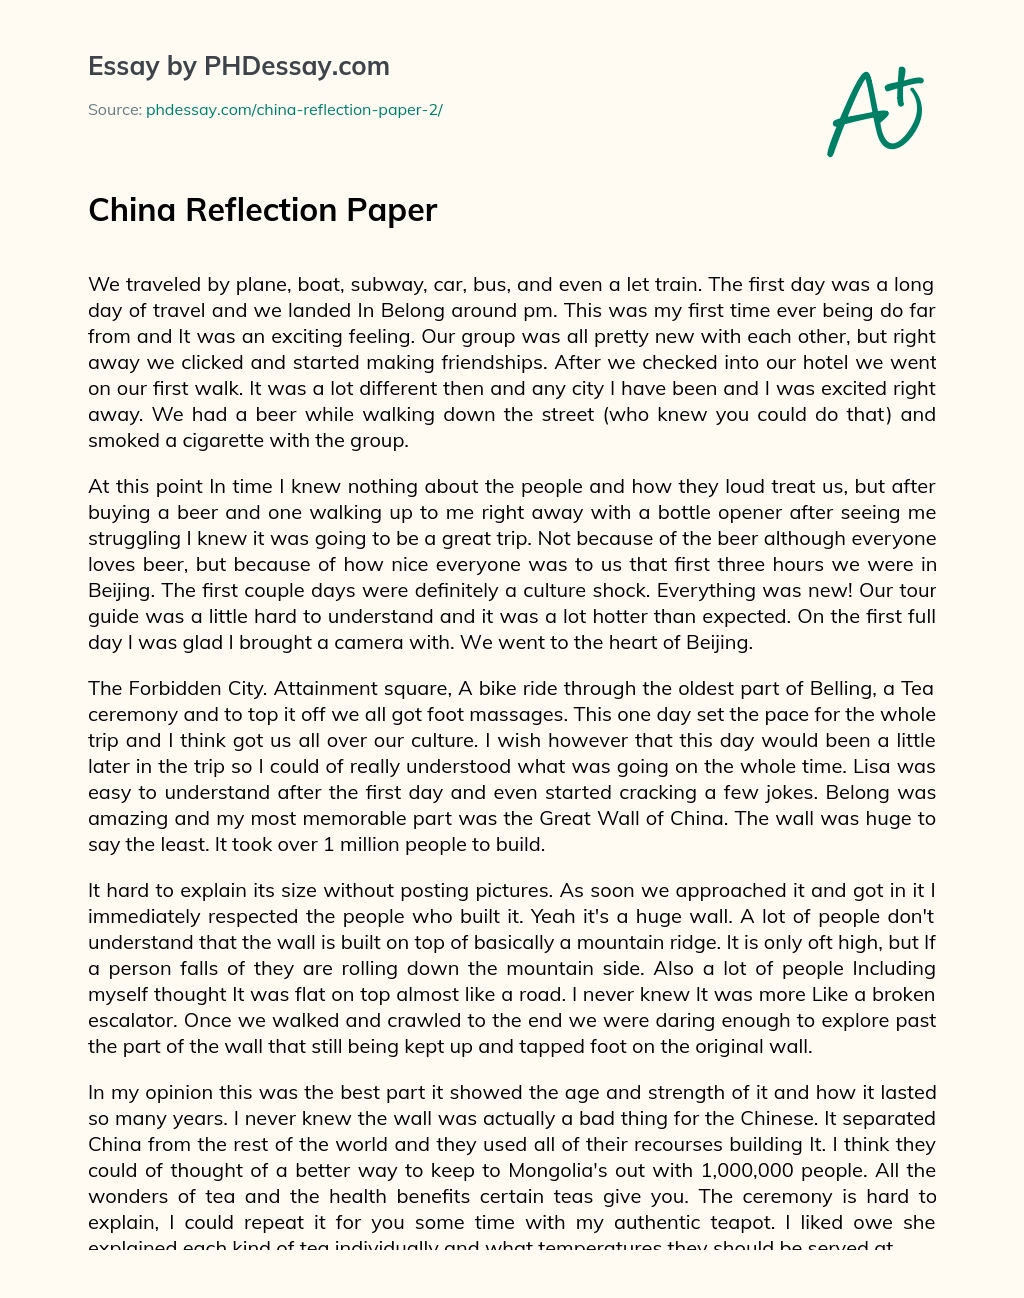 China Reflection Paper essay